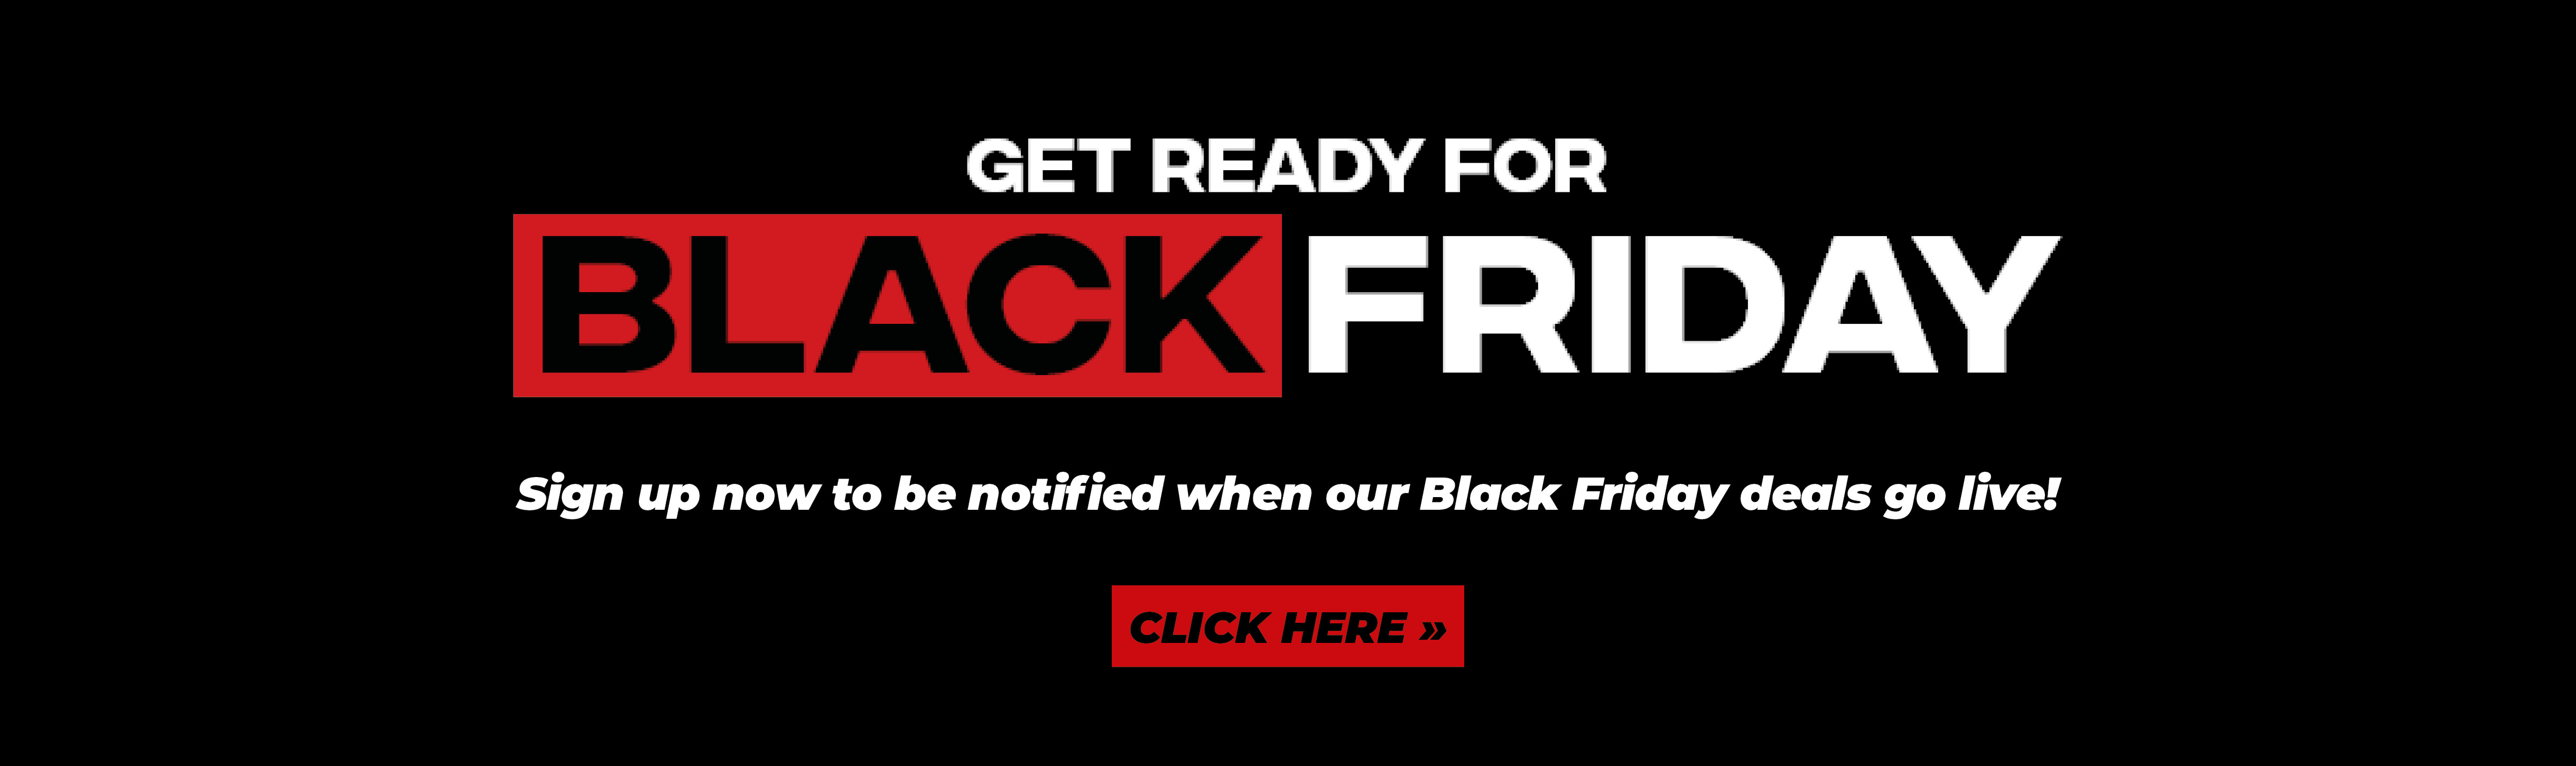 Black Friday Web HP banner.jpg